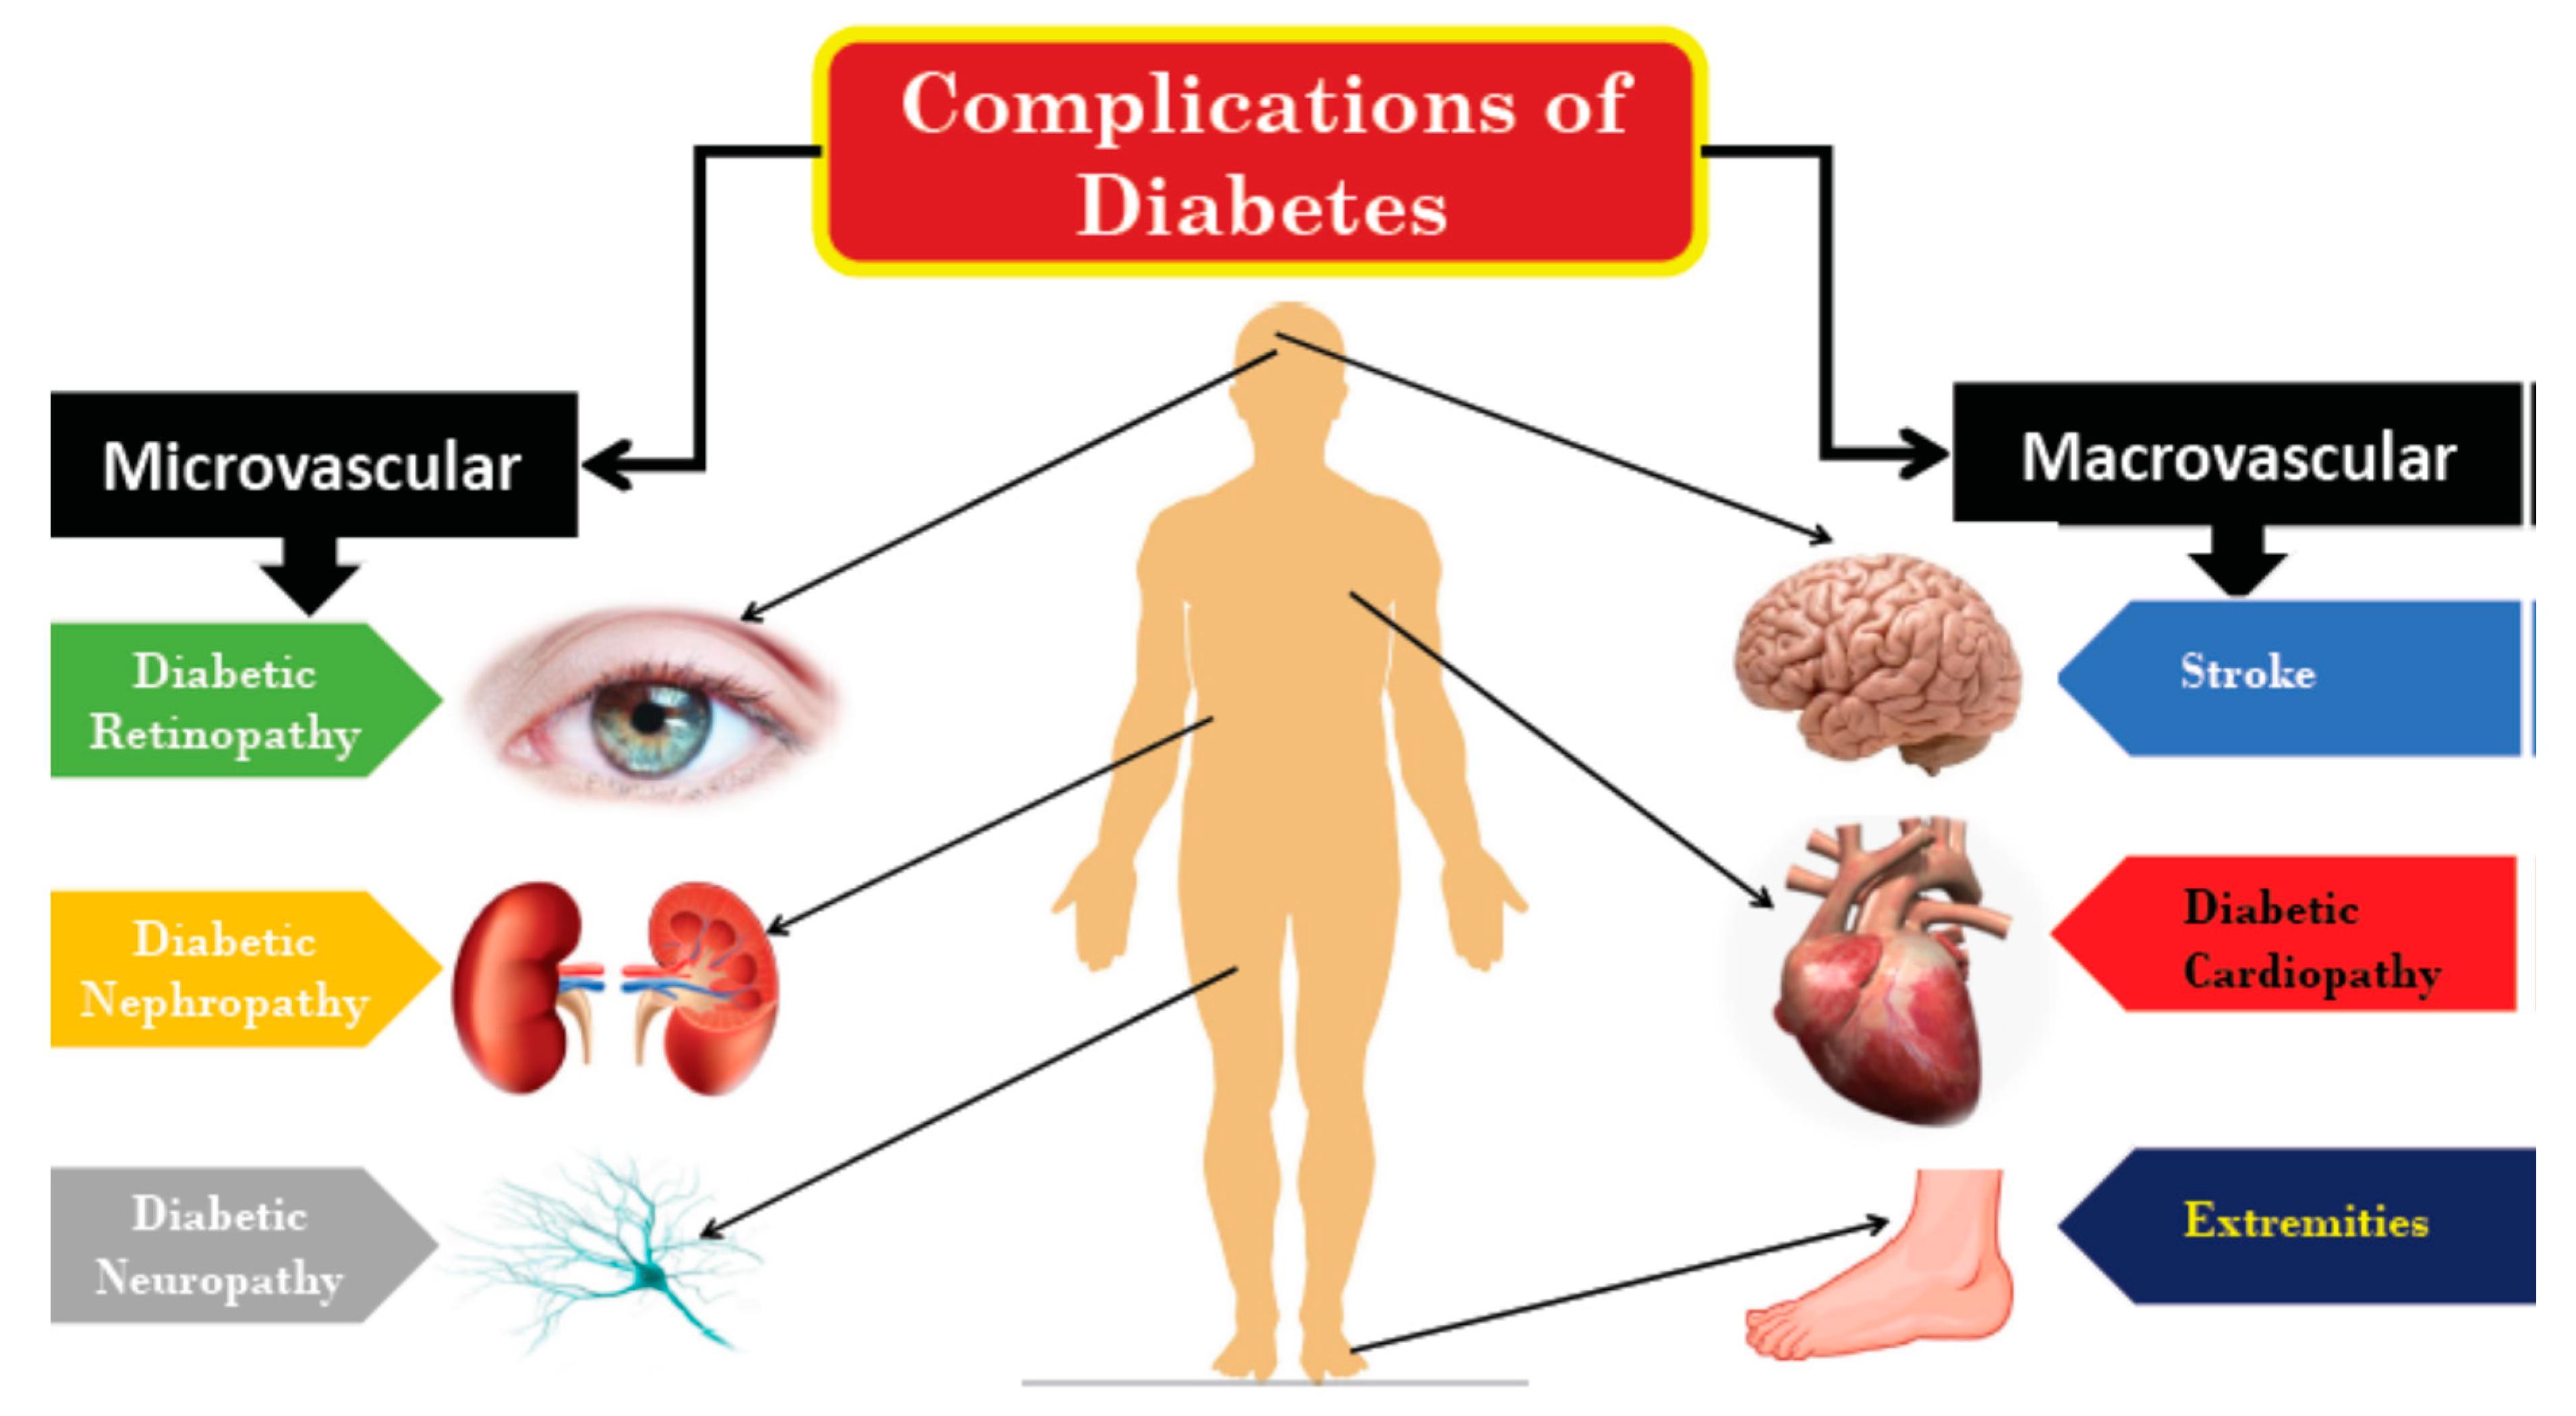 Diabetic nephropathy resources